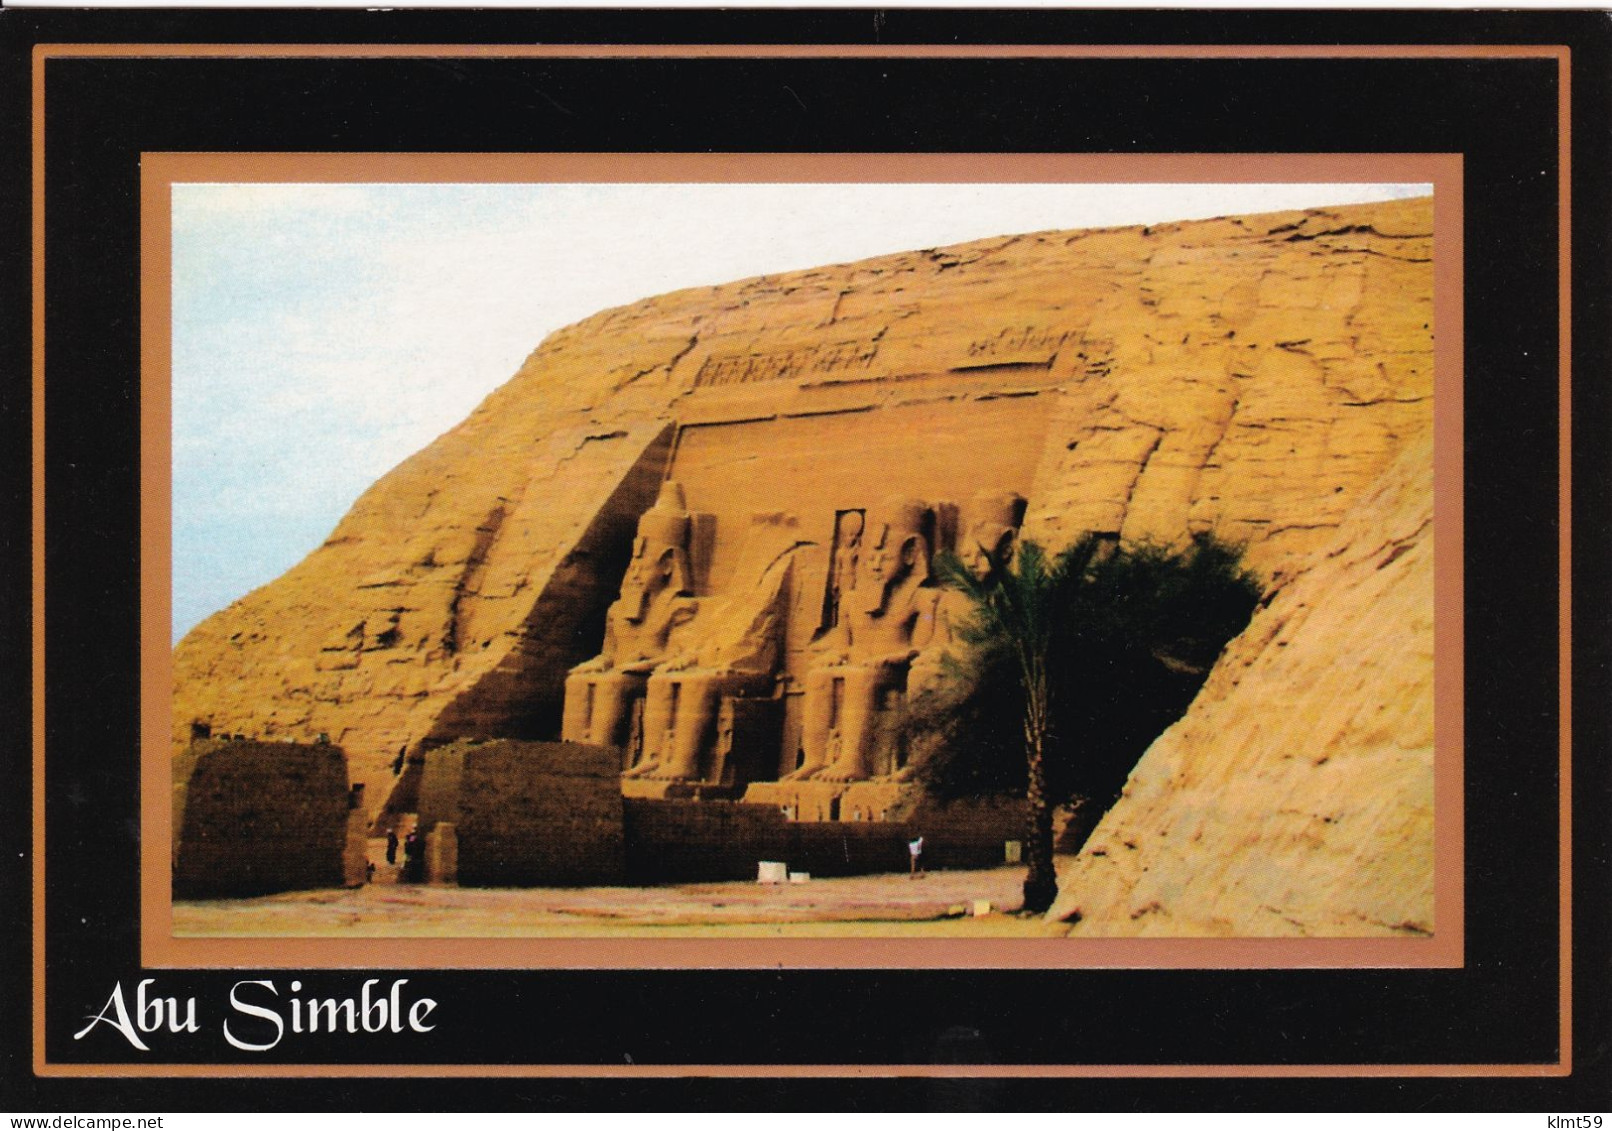 Abu Simble - Abu Simbel Temples